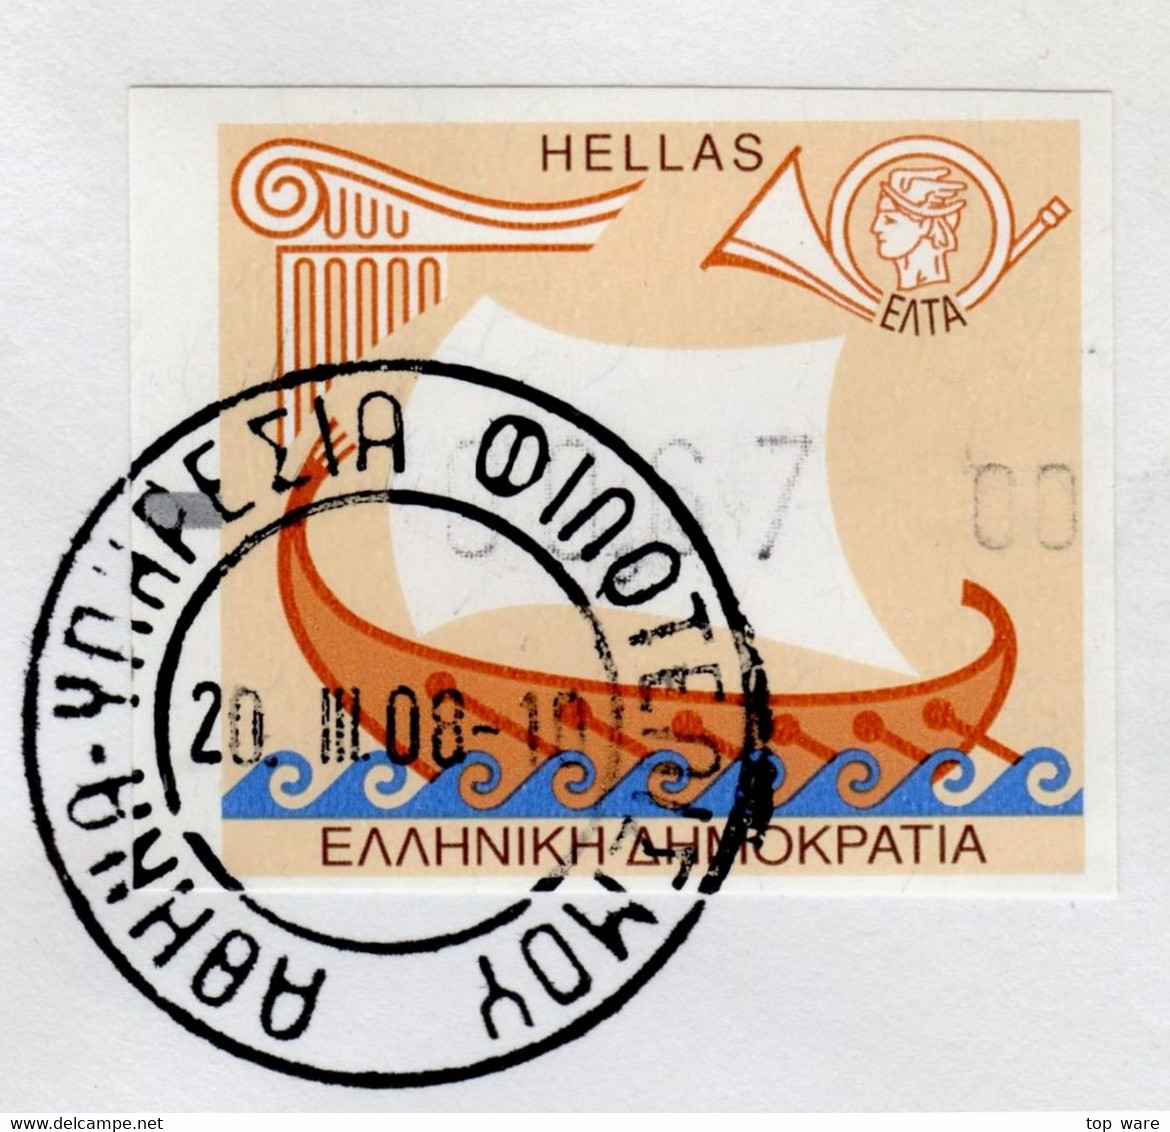 Greece Griechenland ATM 20 / Ship Boat / 2002 Euro Issue / 0,67 On Cover 20.III.08 / Frama Etiquetas Automatenmarken - Machine Labels [ATM]